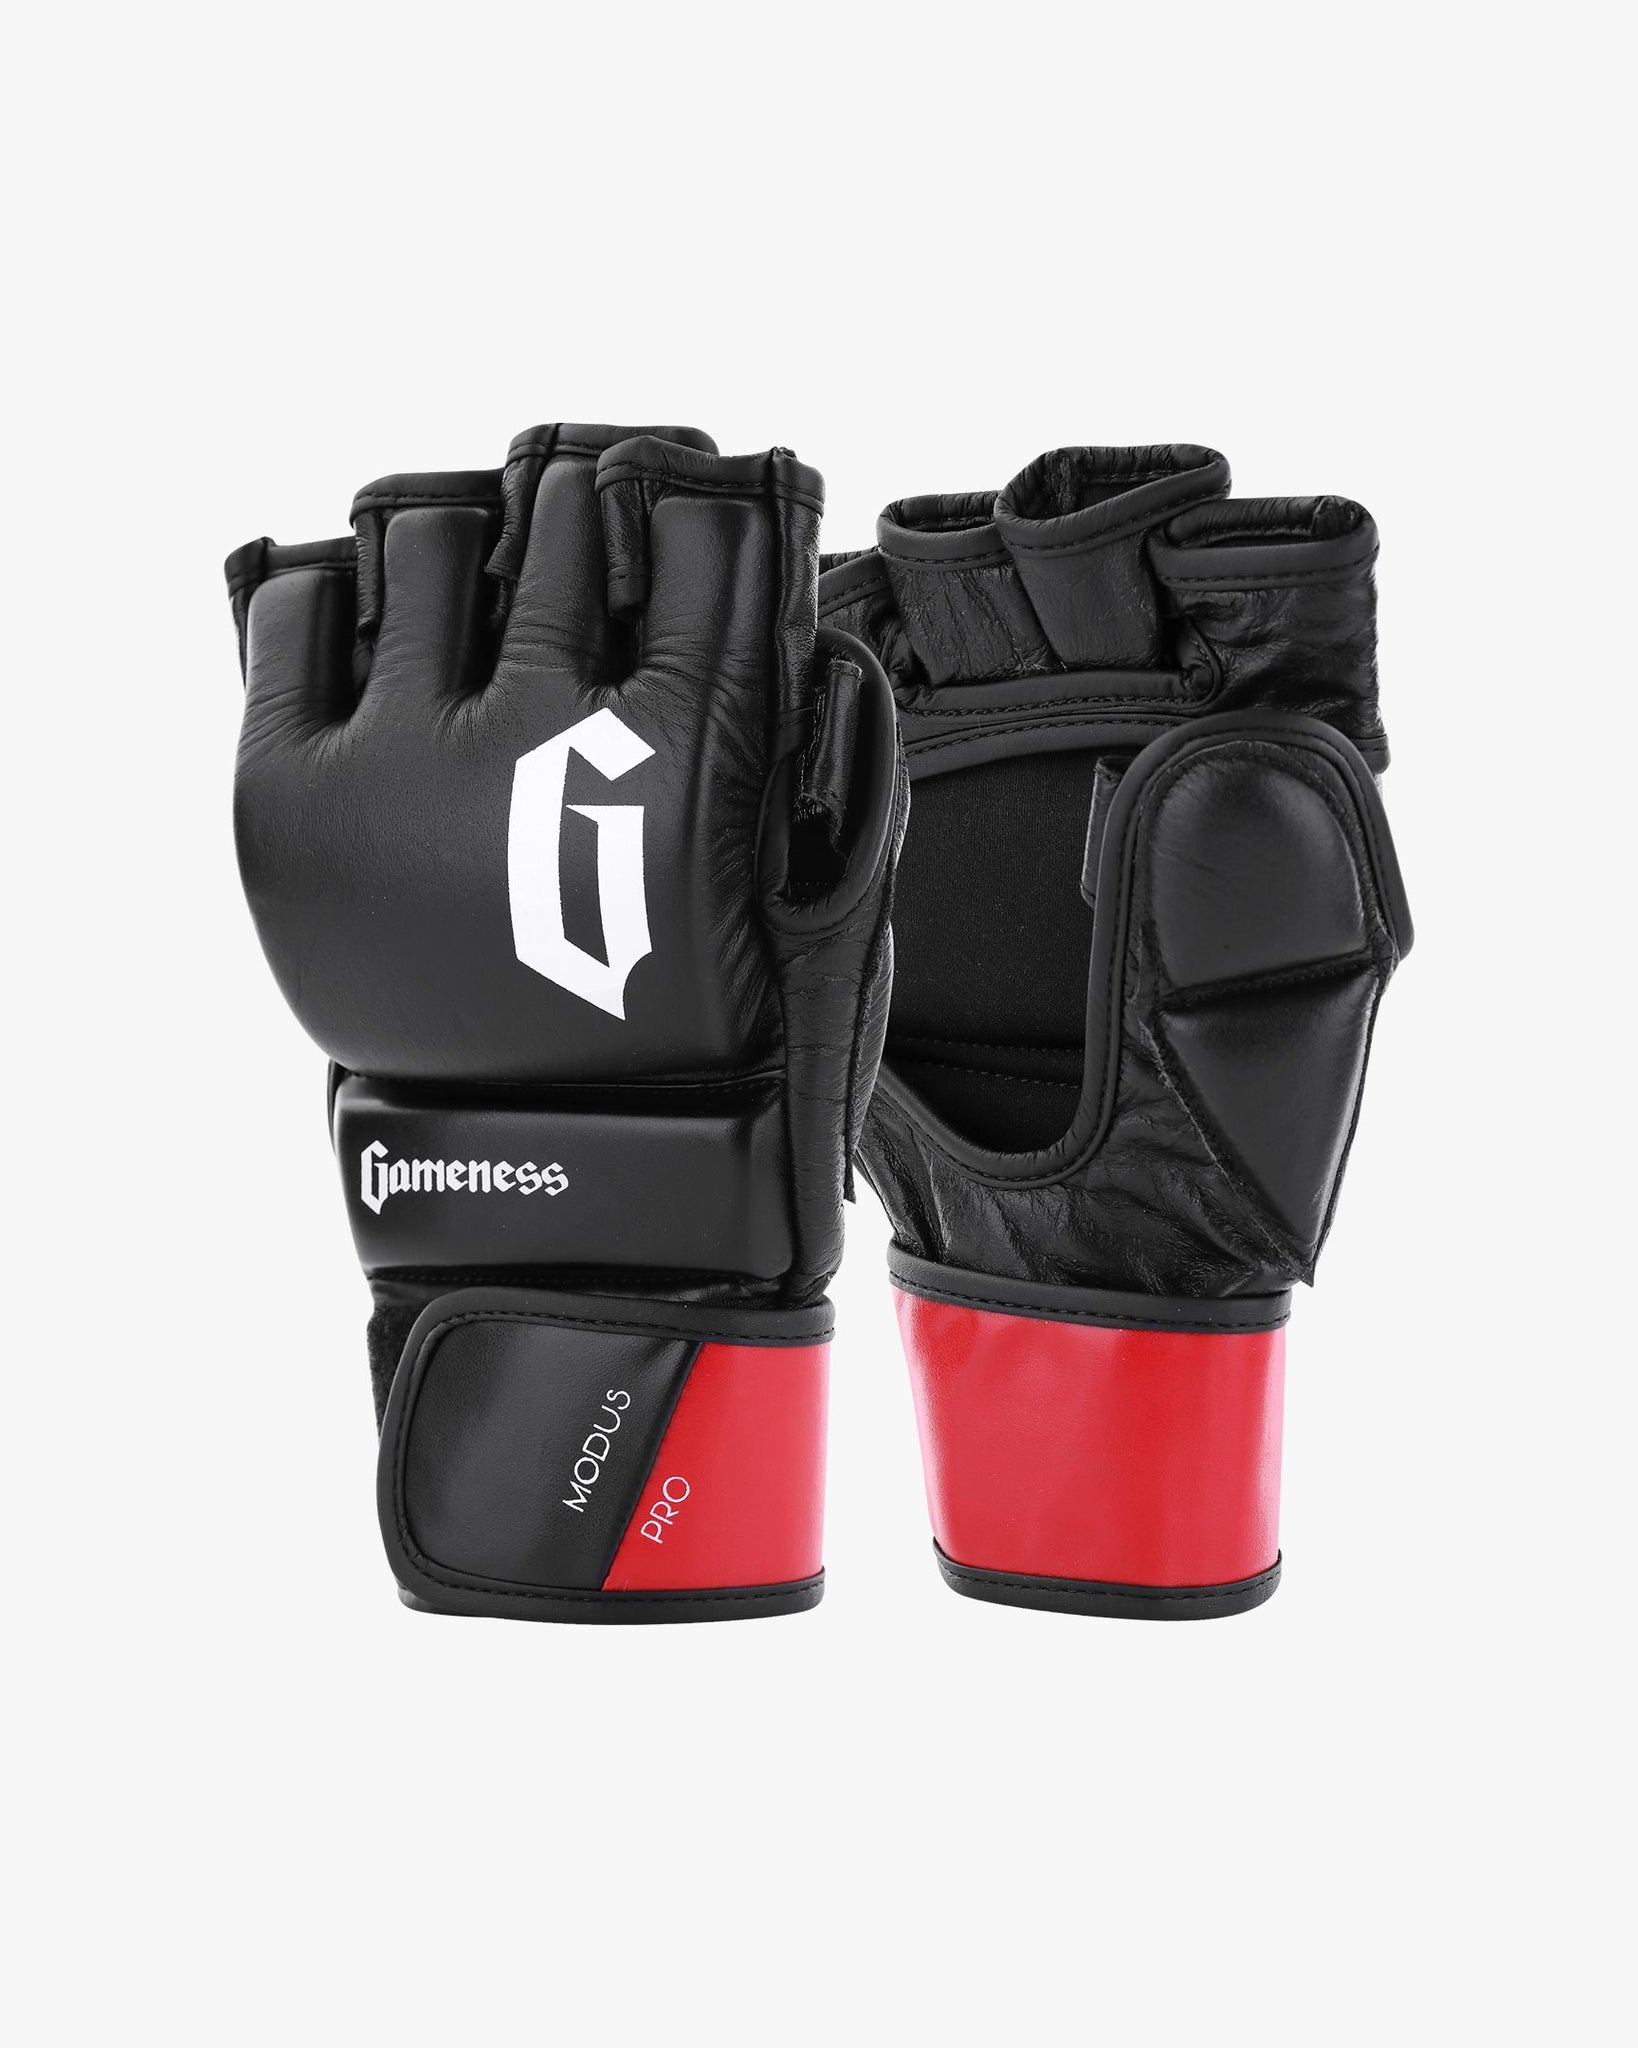 Modus Pro Training Gloves Black White Red